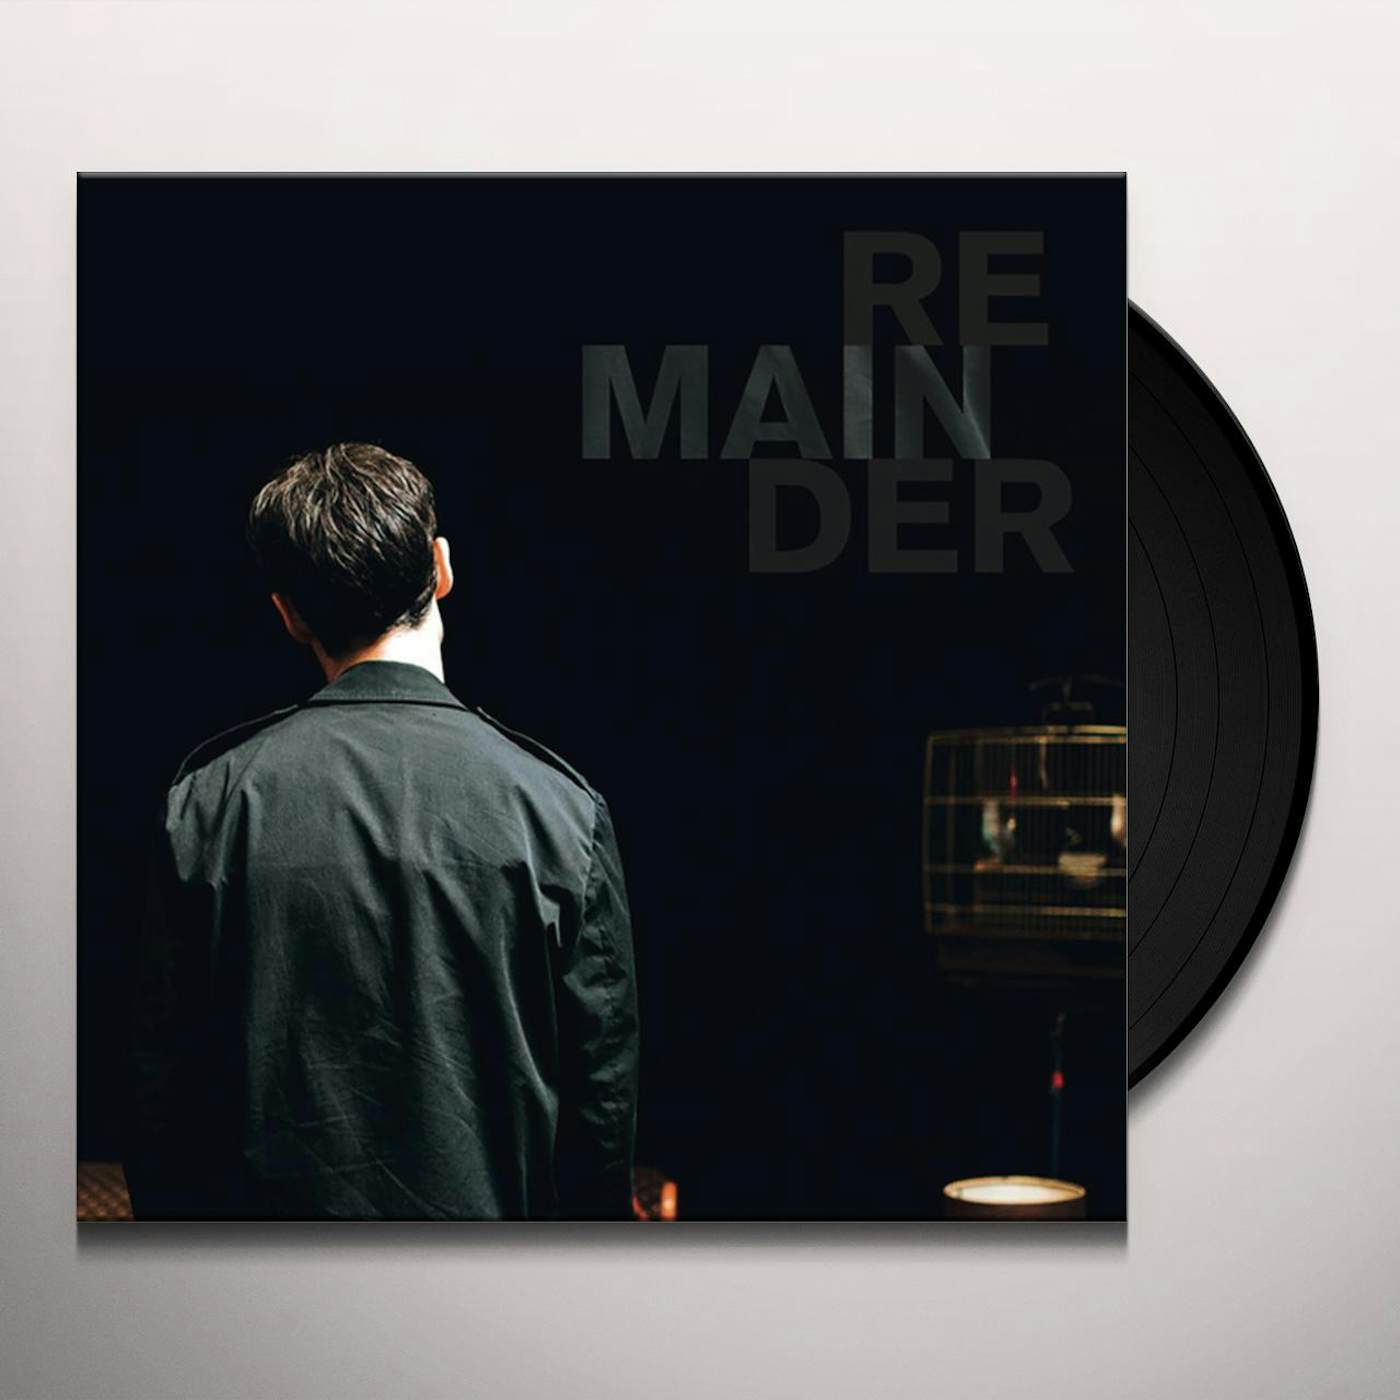 Remainder / O.S.T. REMAINDER / Original Soundtrack Vinyl Record